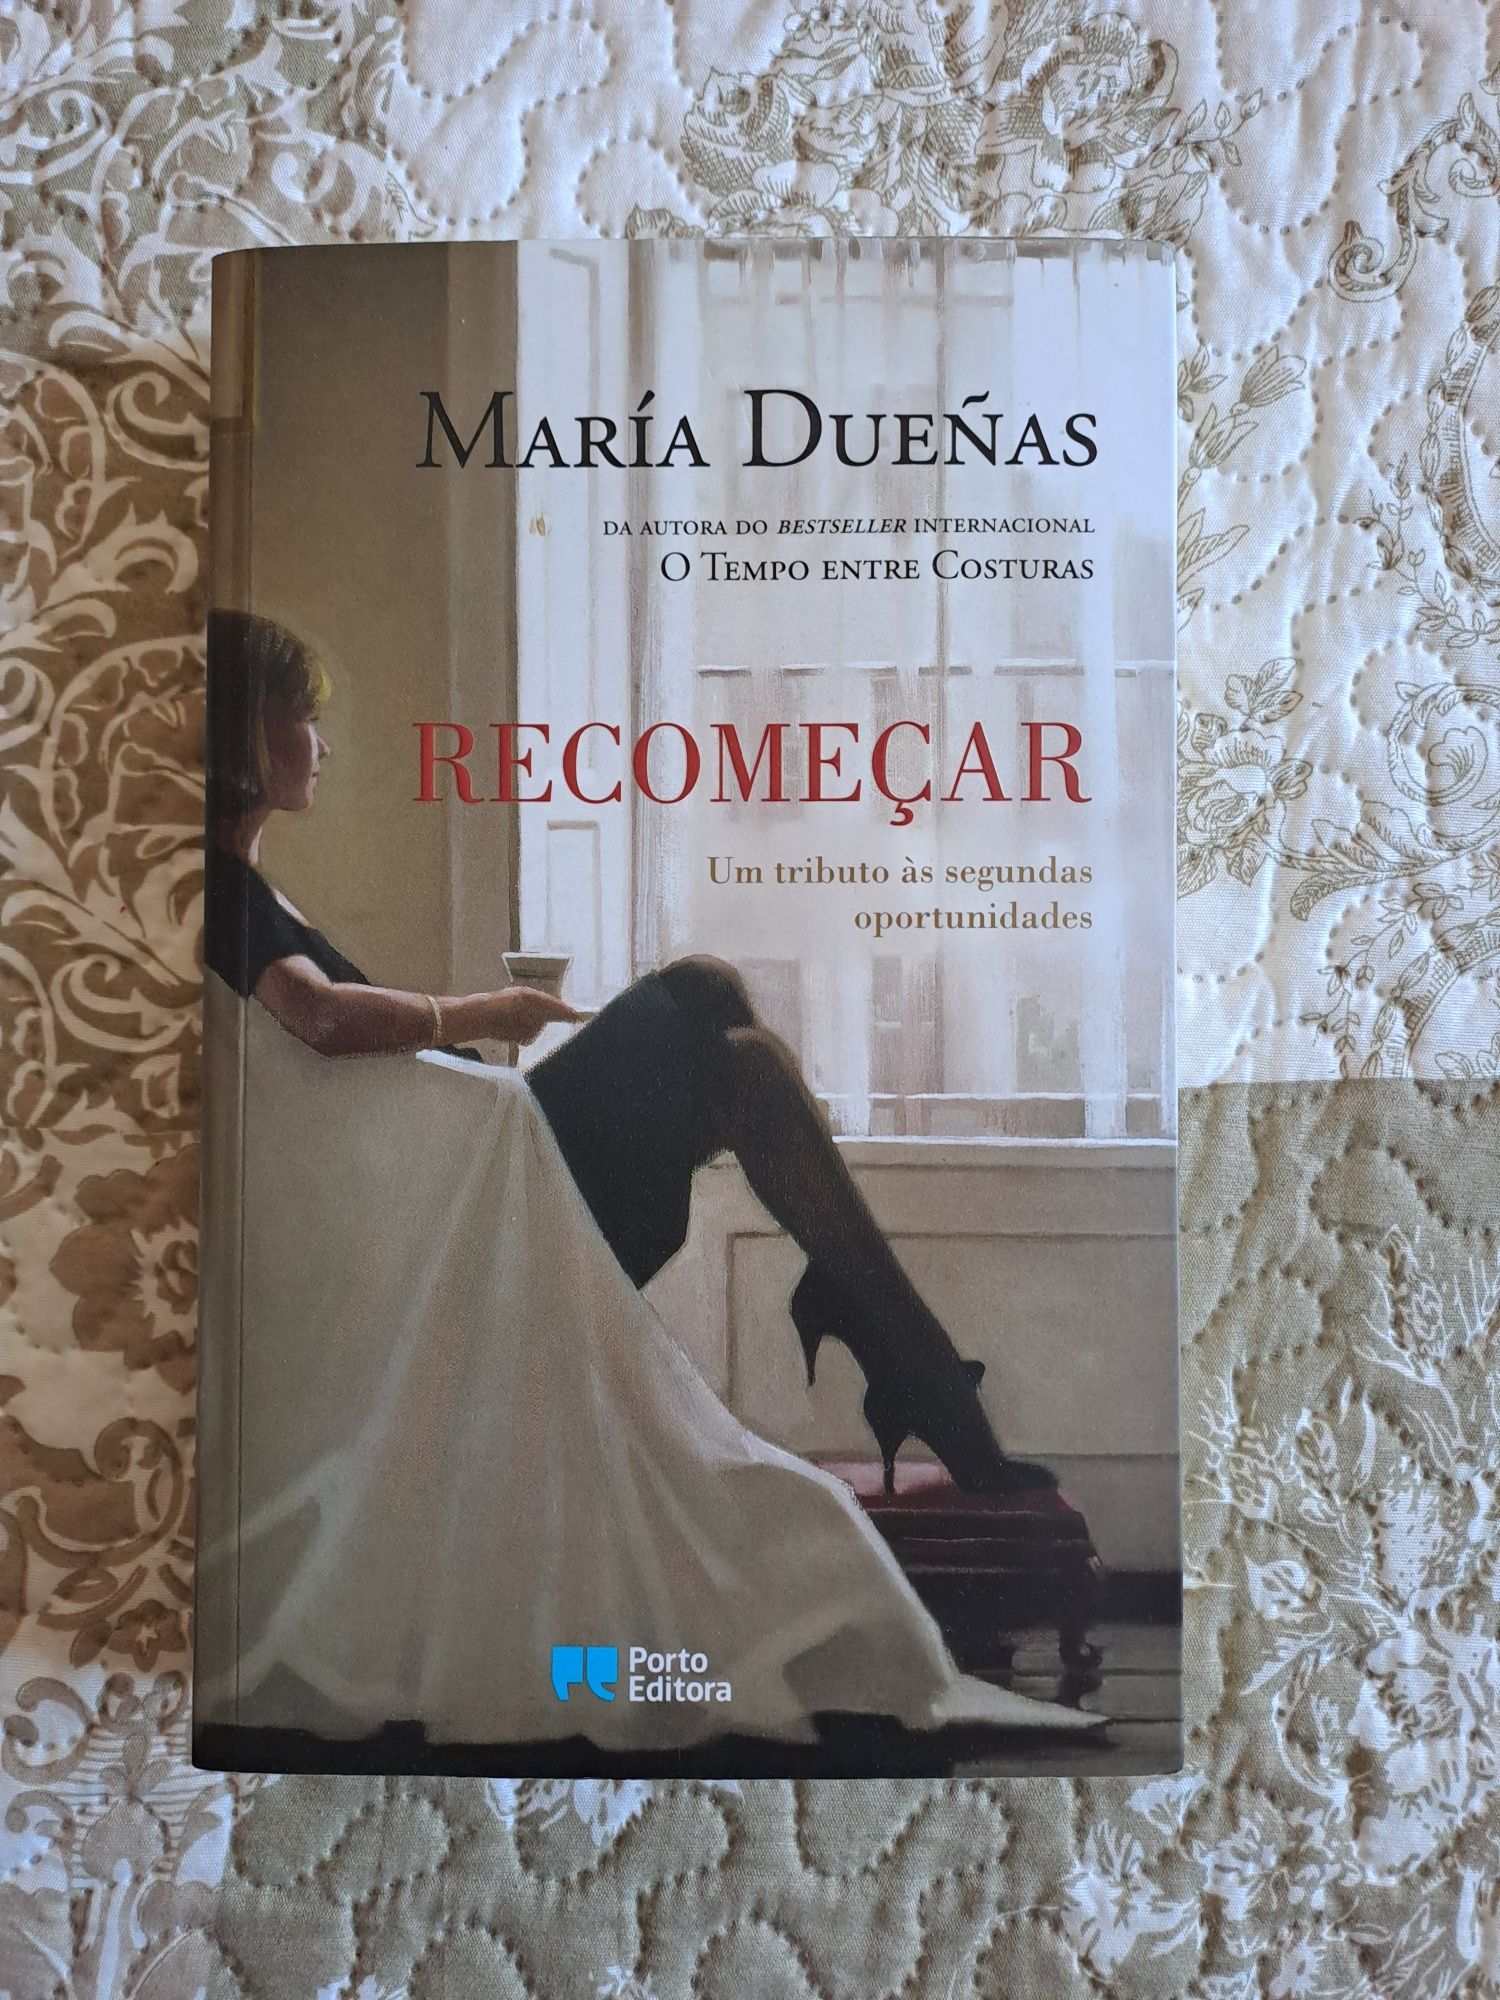 Livro "Recomeçar" de María Dueñas